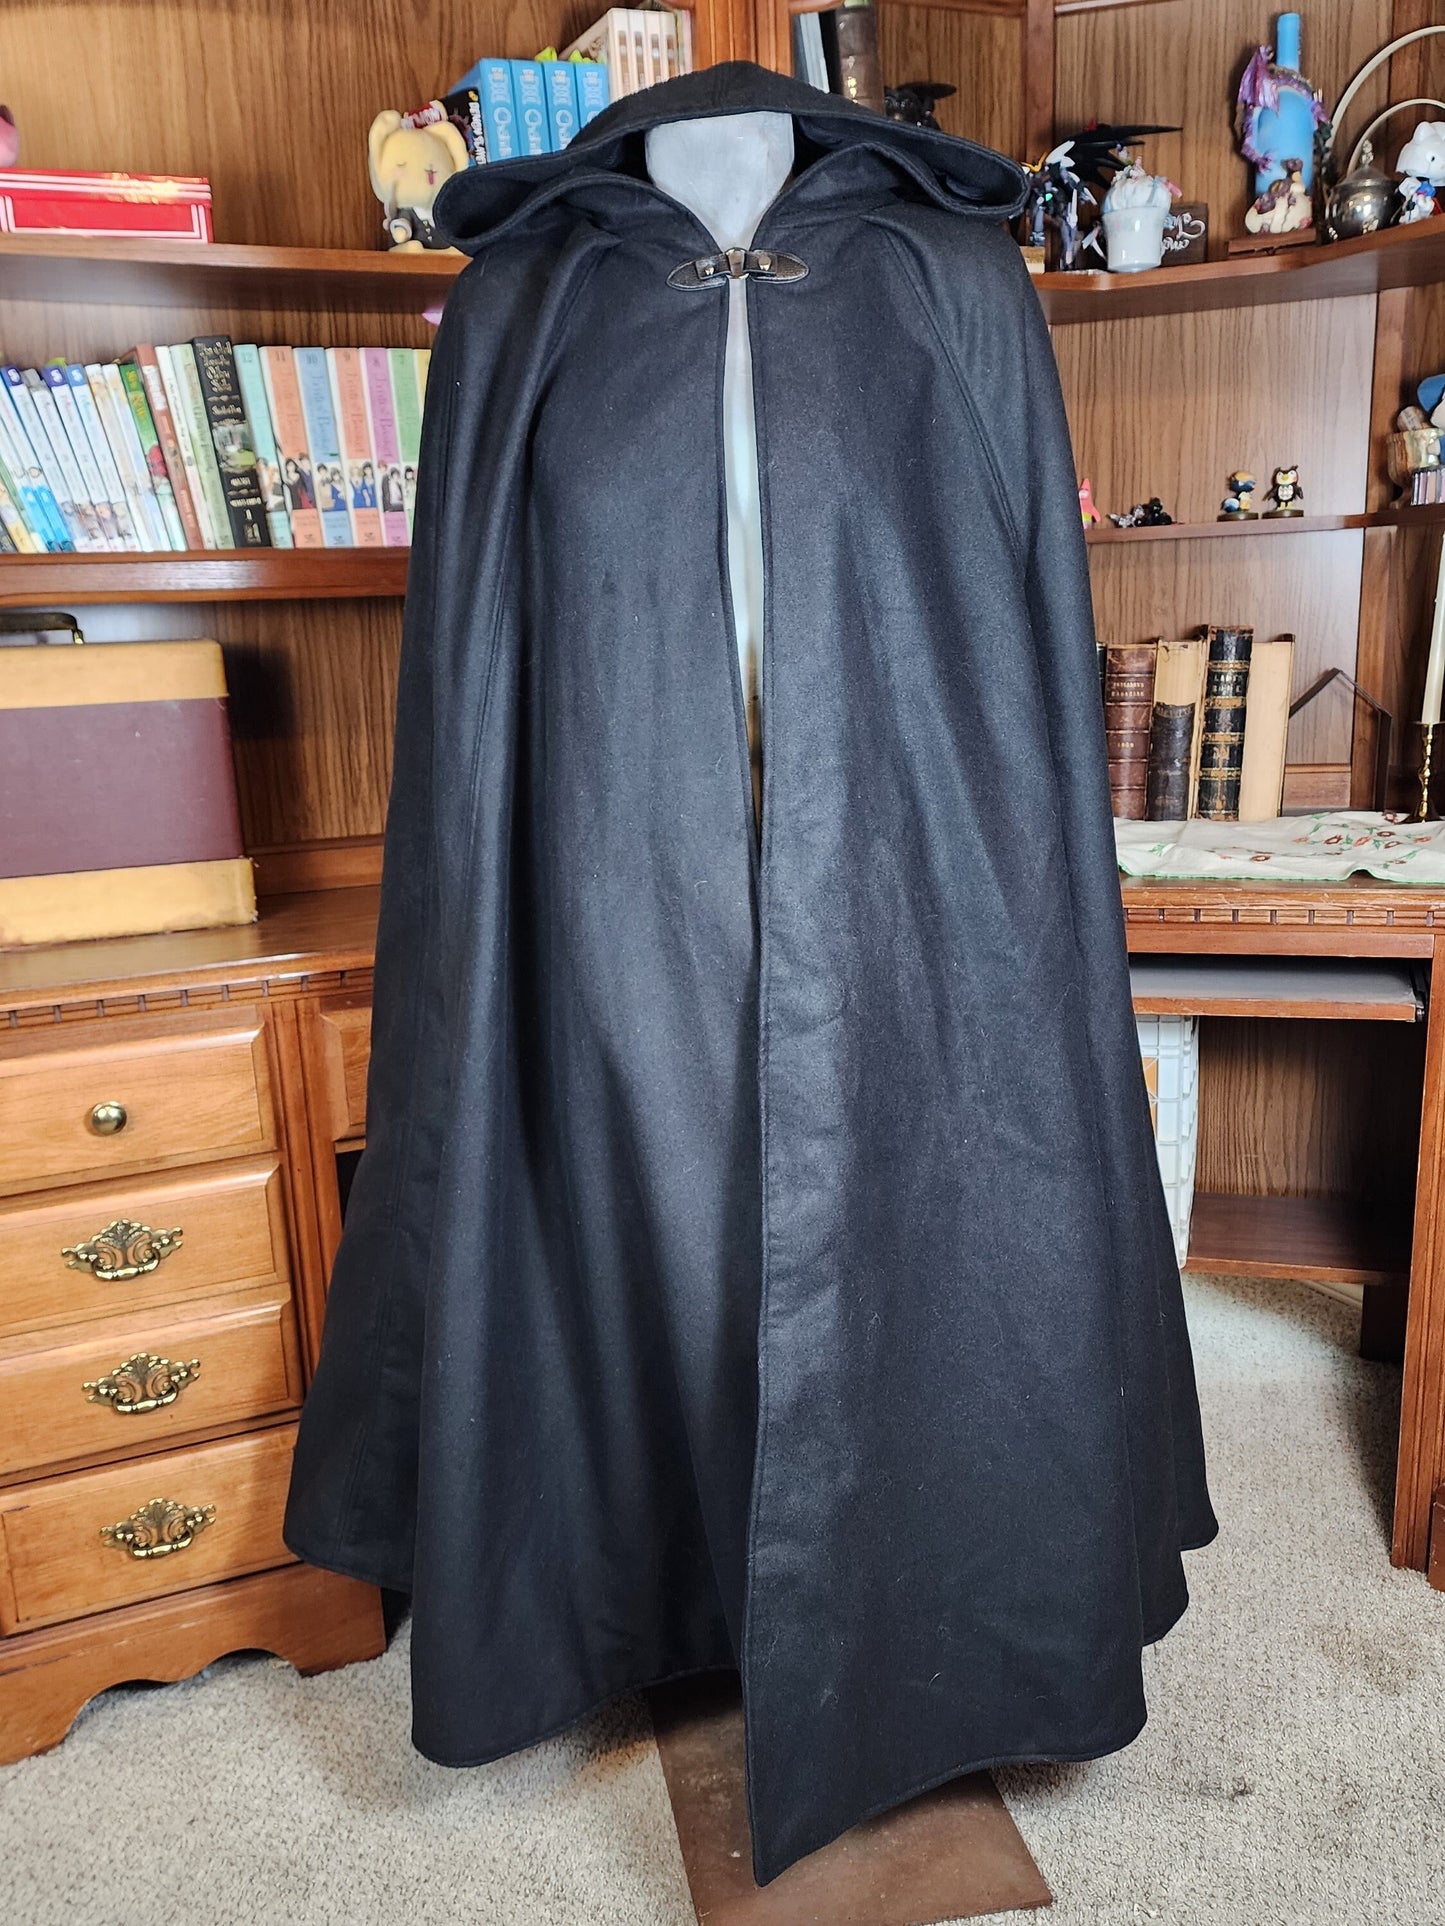 Winter Wanderer Cloak- Black full circle cloak with Black water resistant lining